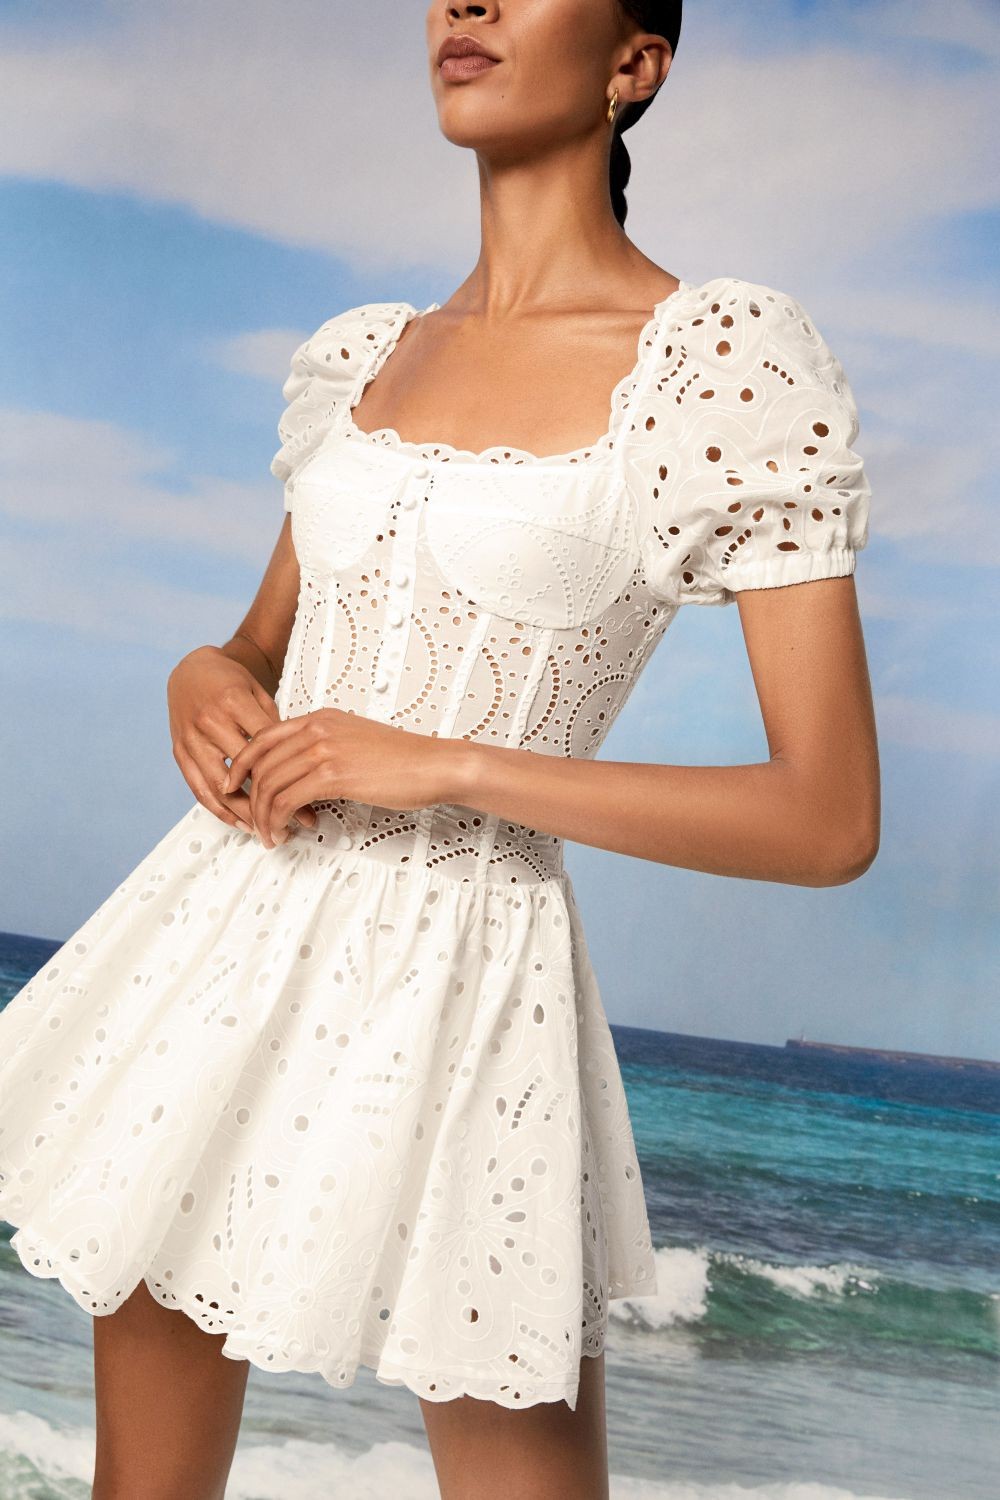 Charo Ruiz Yara Dress - Premium Short dress from Marina St Barth - Just $595.00! Shop now at Marina St Barth